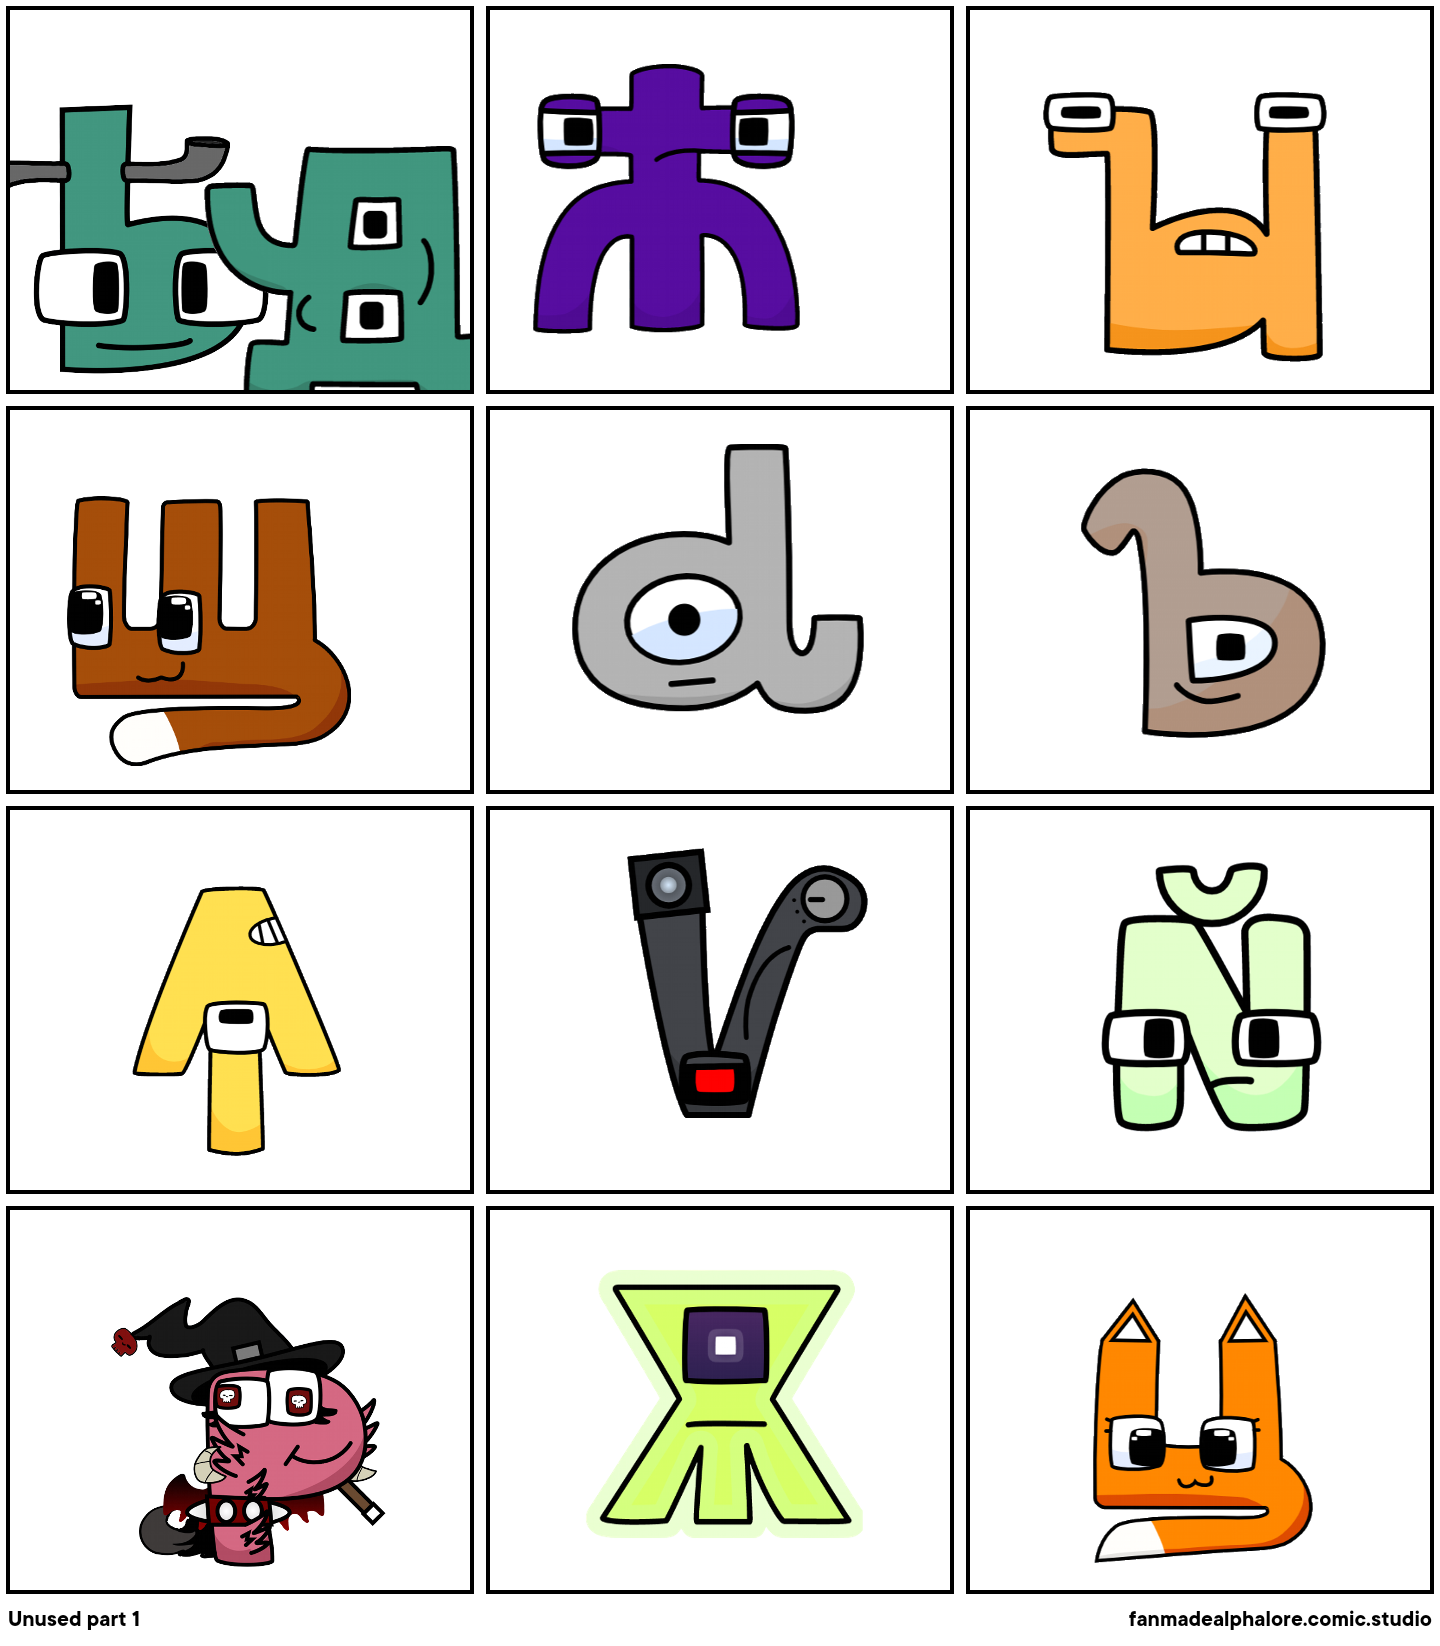 Guh (Character), Unifon Alphabet Lore Wiki